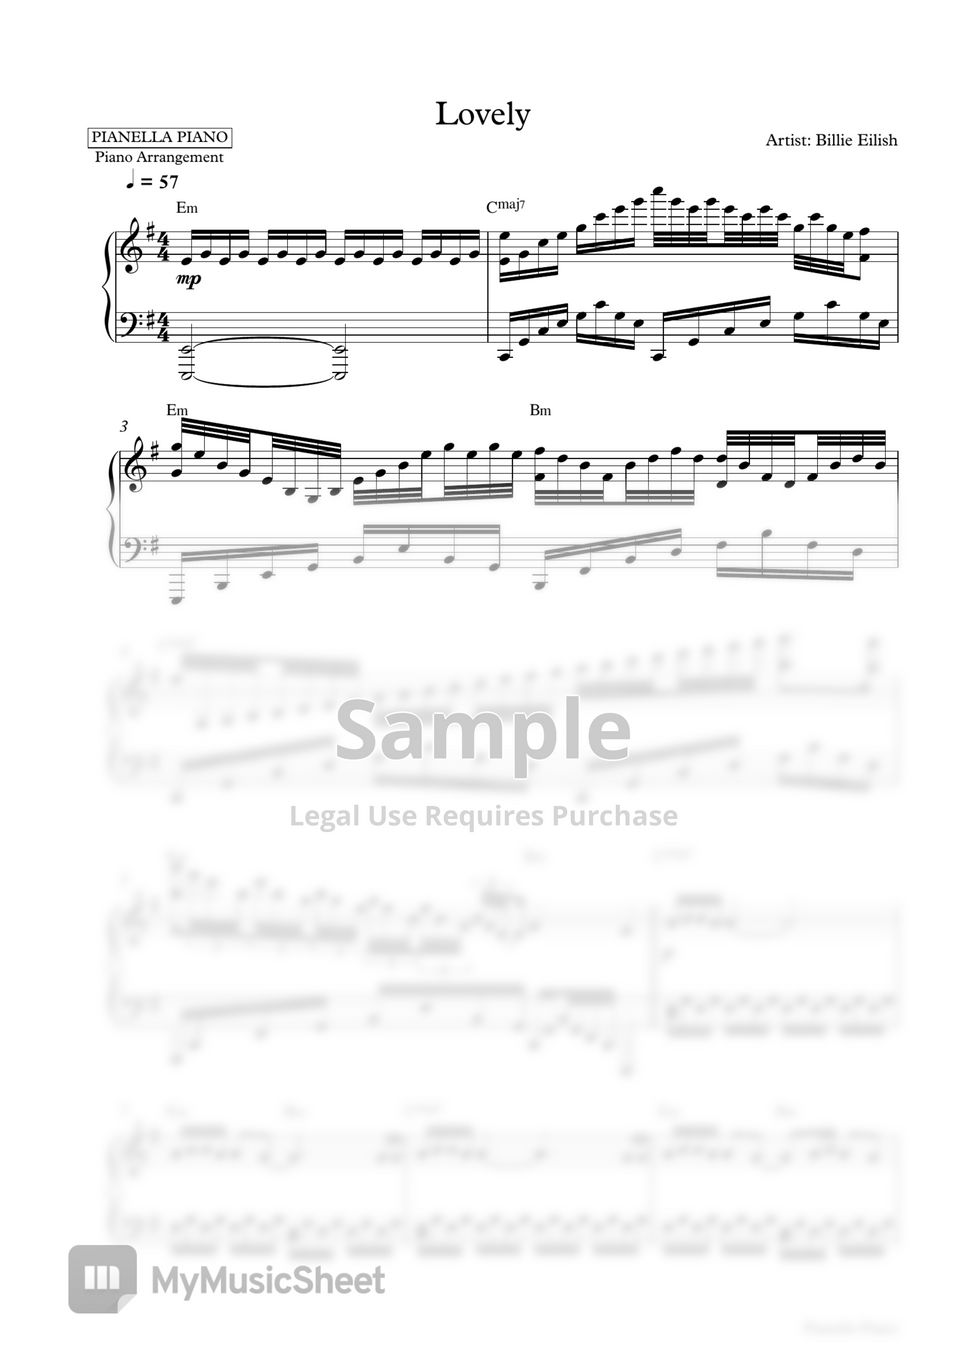 Billie Eilish - Lovely (Piano Sheet) by Pianella Piano